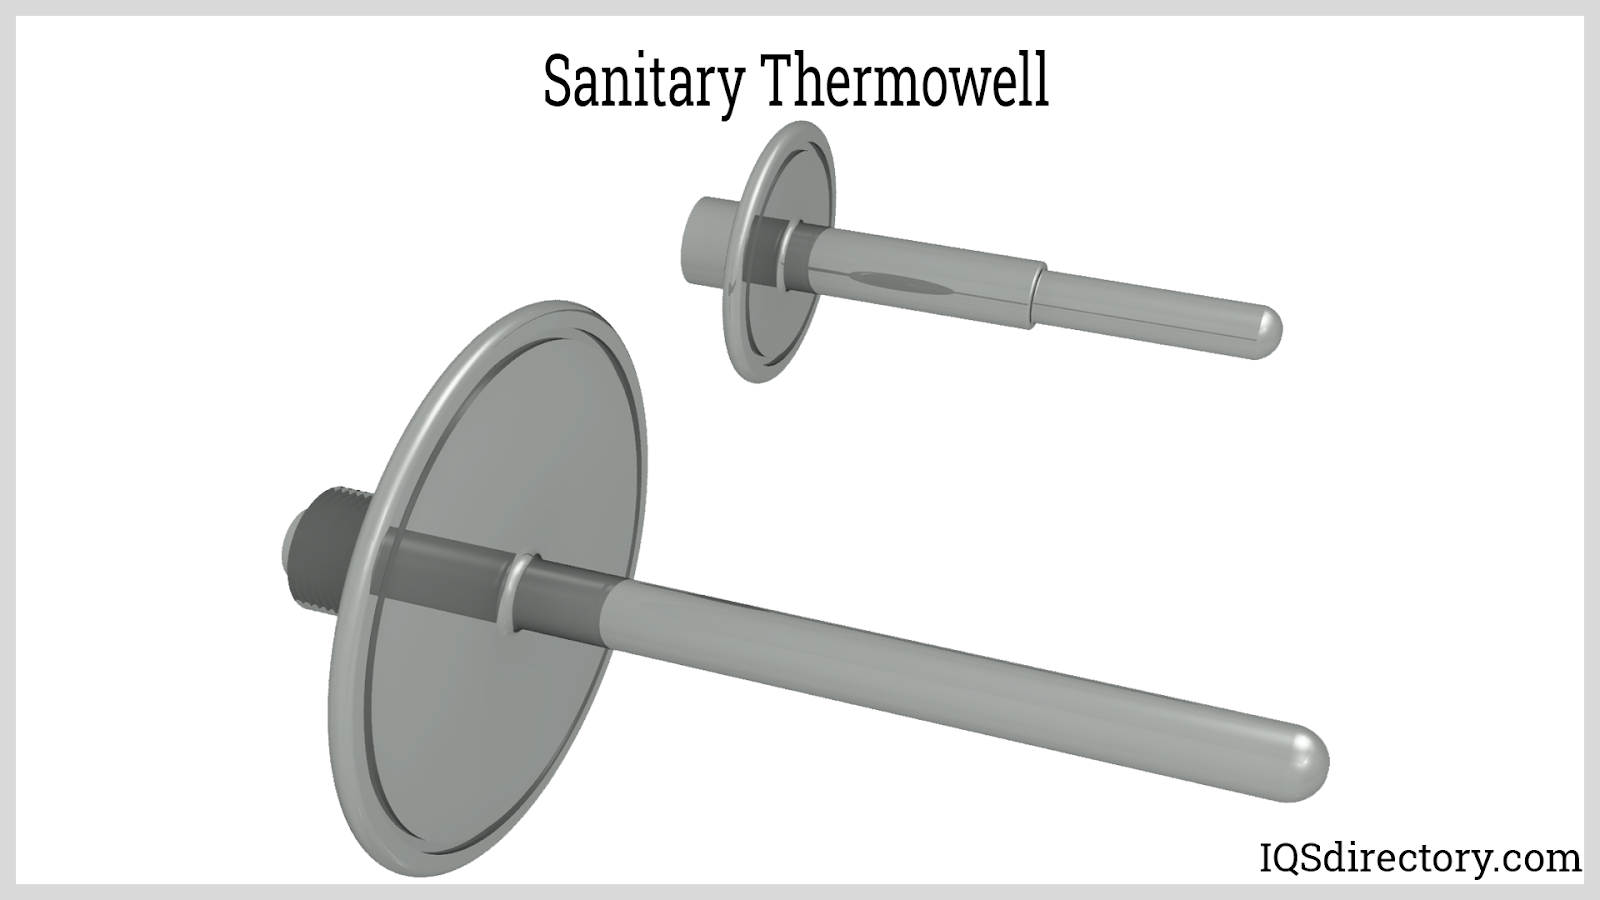 Sanitary Thermowell